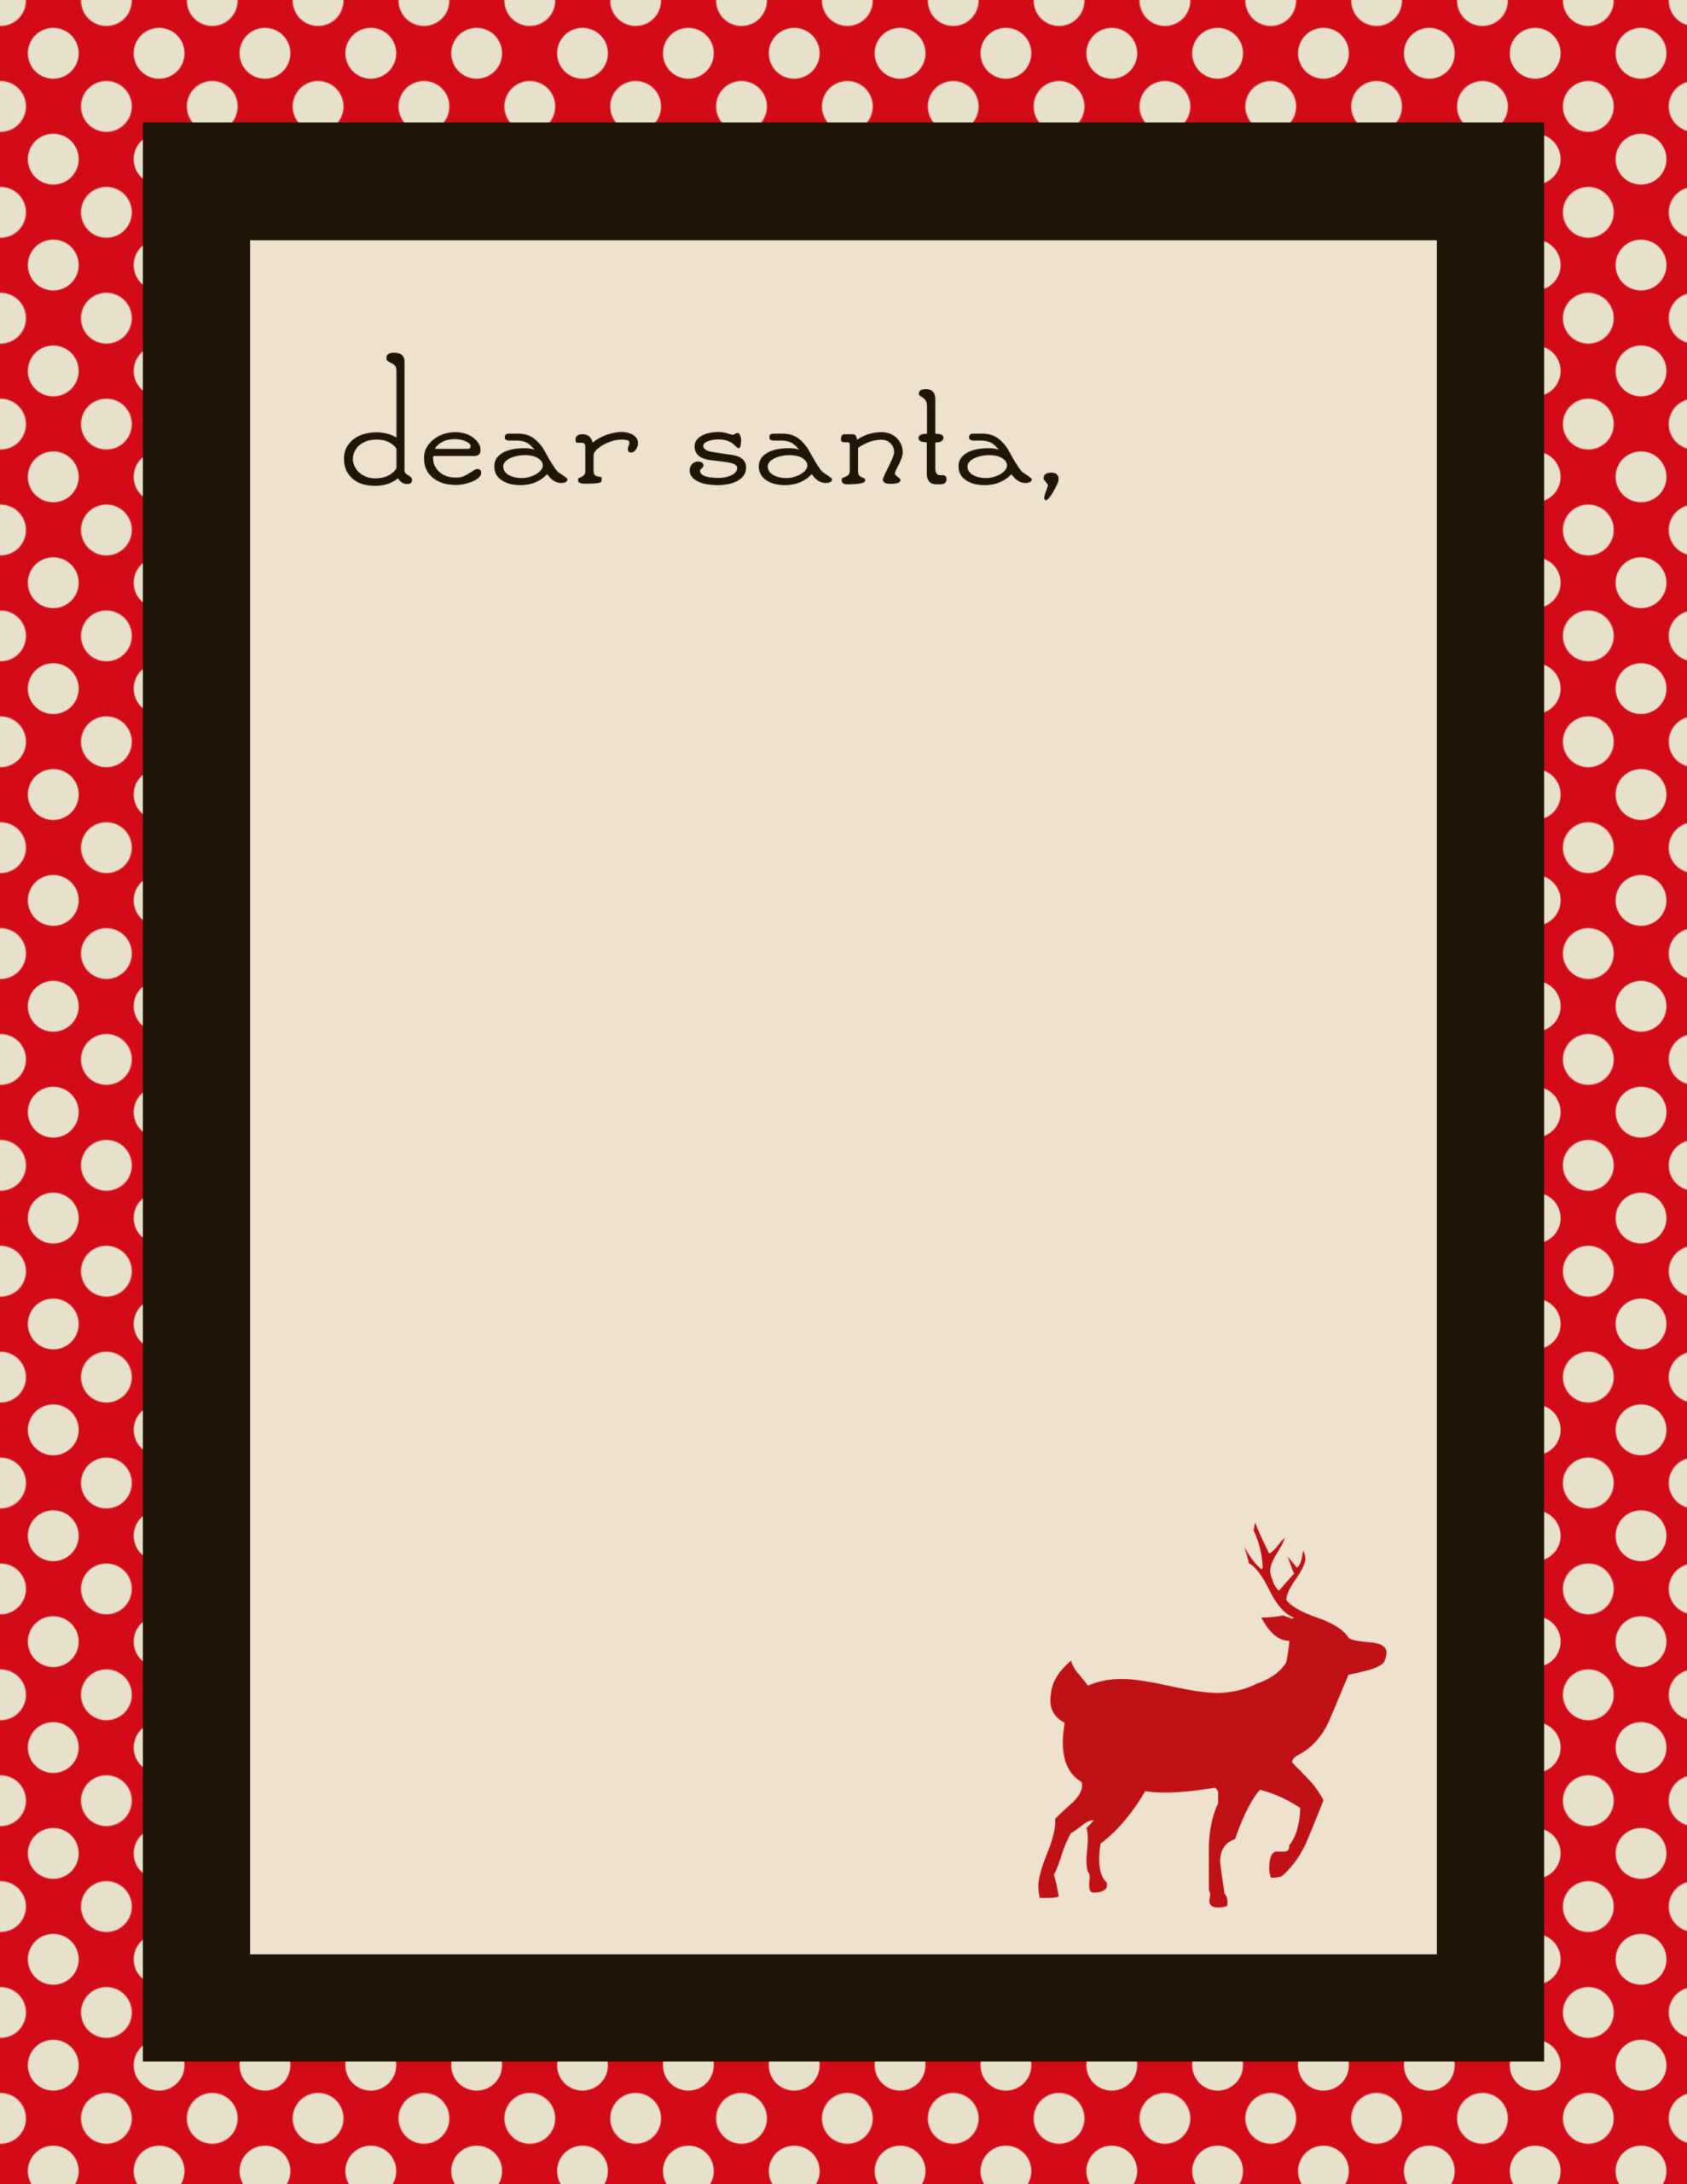 Free Santa Letter Templates | Oldsaltfarm For Santa Letter Template Word